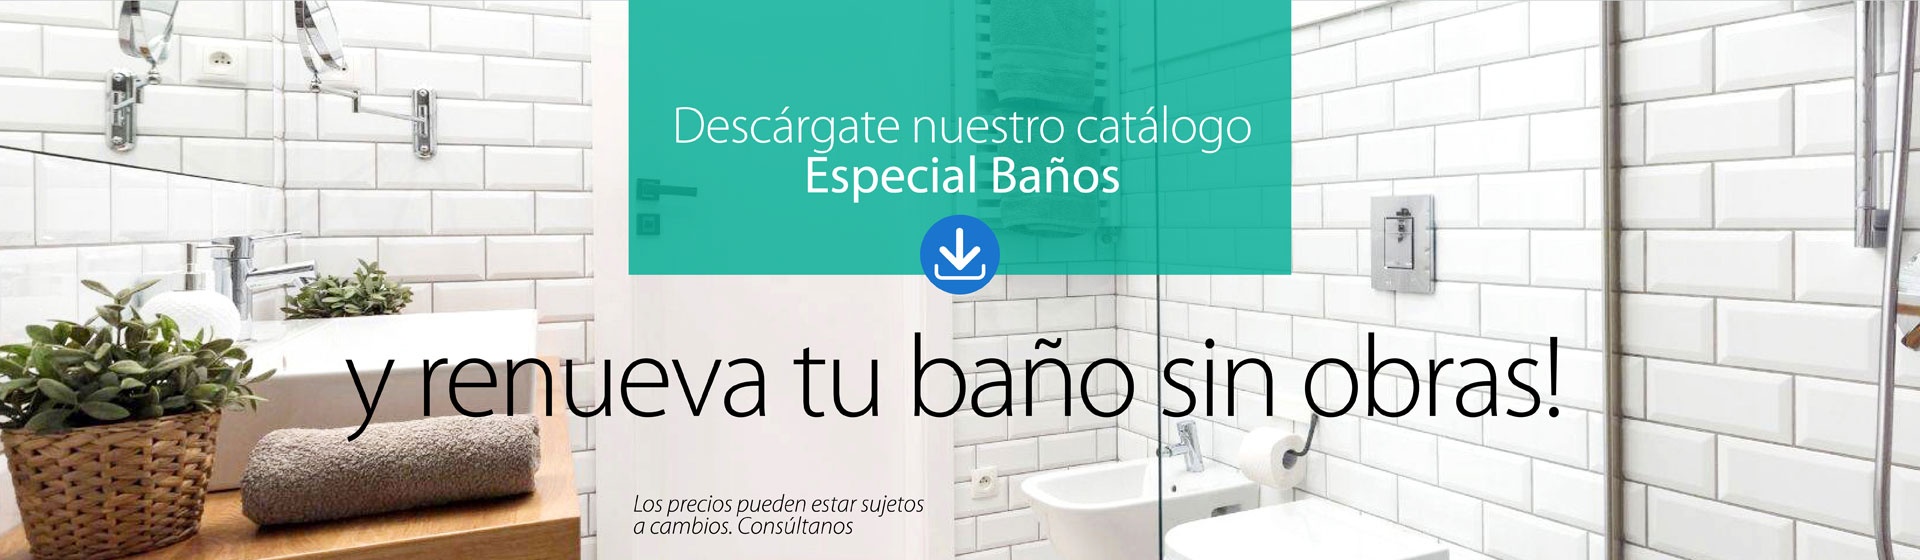 Catálogo especial baños